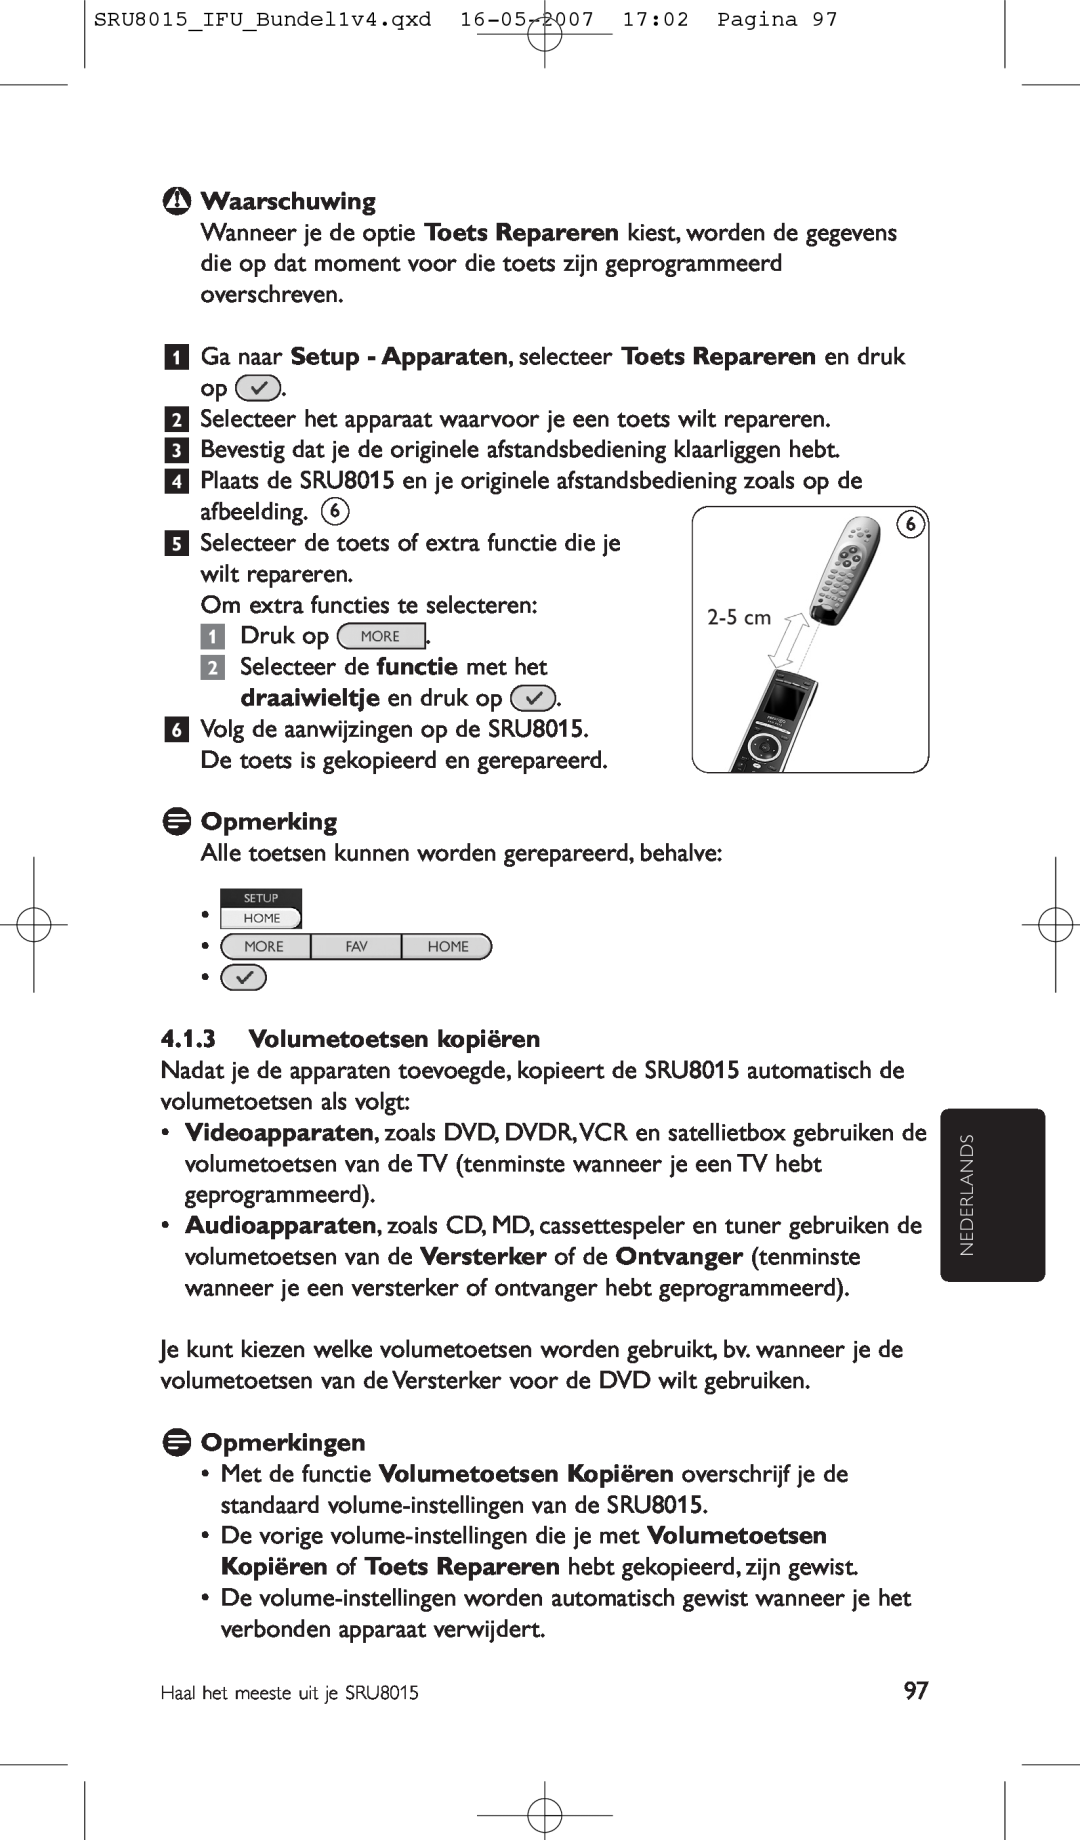 Philips SRU8015 manual B Waarschuwing, draaiwieltje en druk op, Volumetoetsen kopiëren, D Opmerkingen 